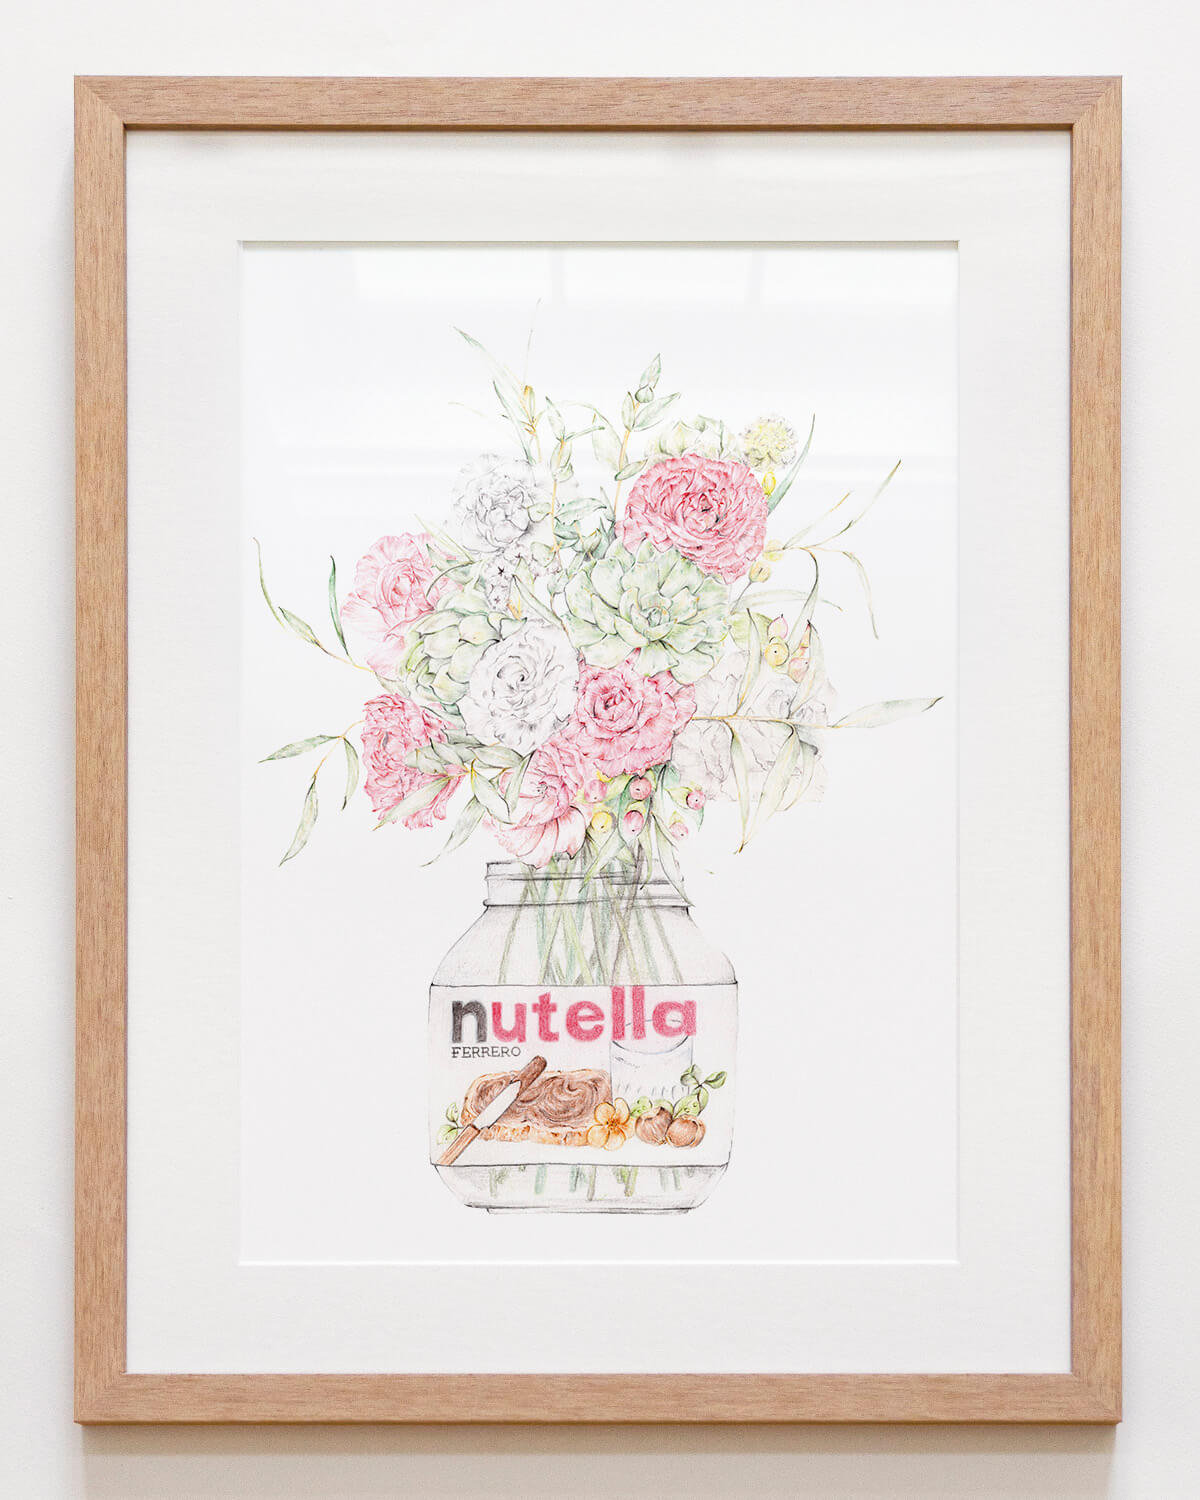 Botanical kitchen art print featuring Nutella